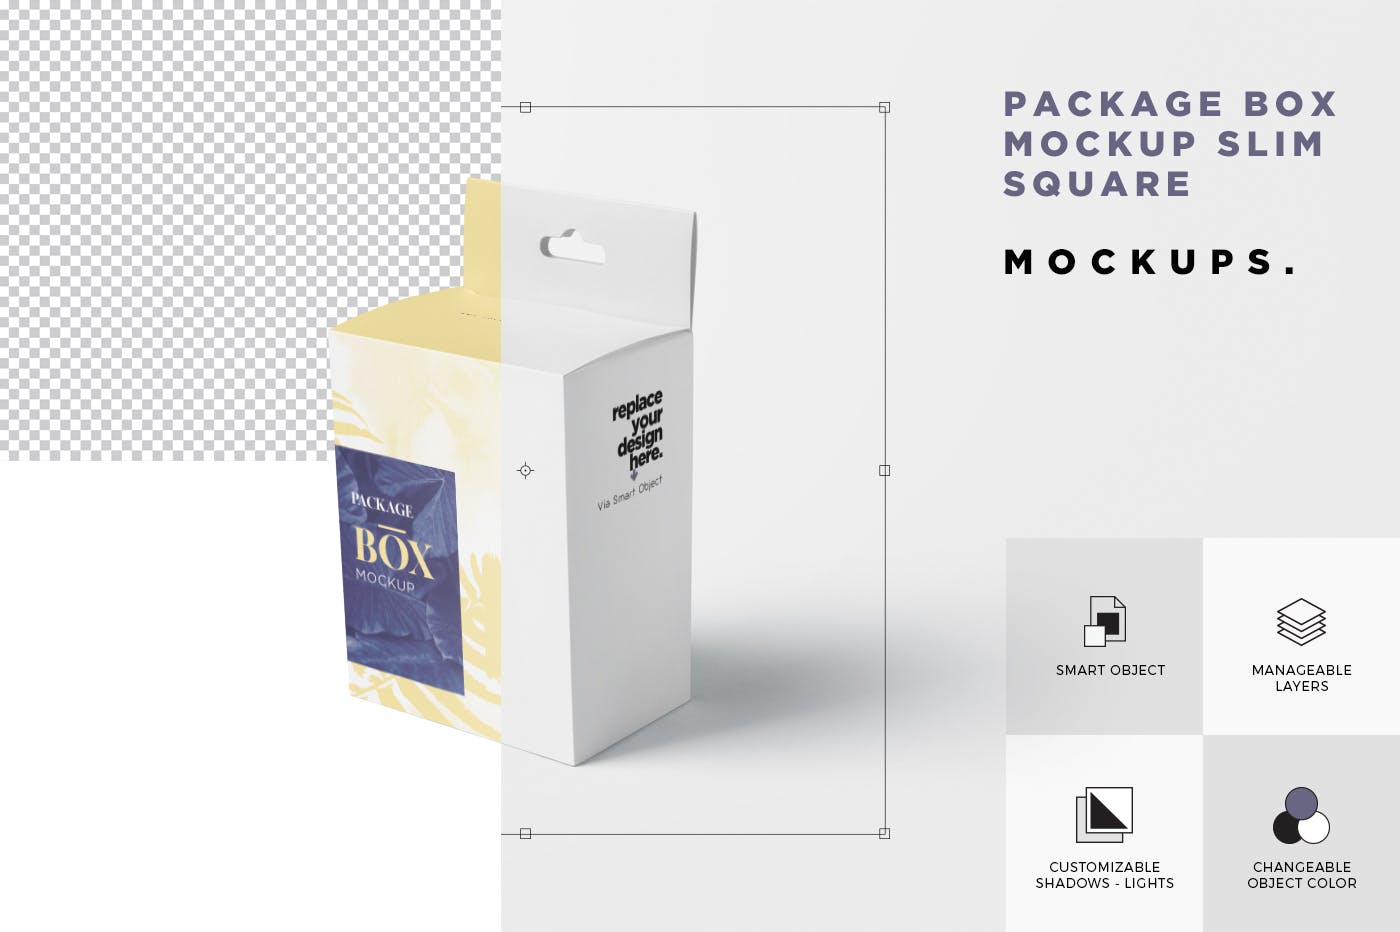 挂耳式扁平矩形包装盒素材中国精选模板 Package Box Mockup Set – Slim Square with Hanger插图(6)